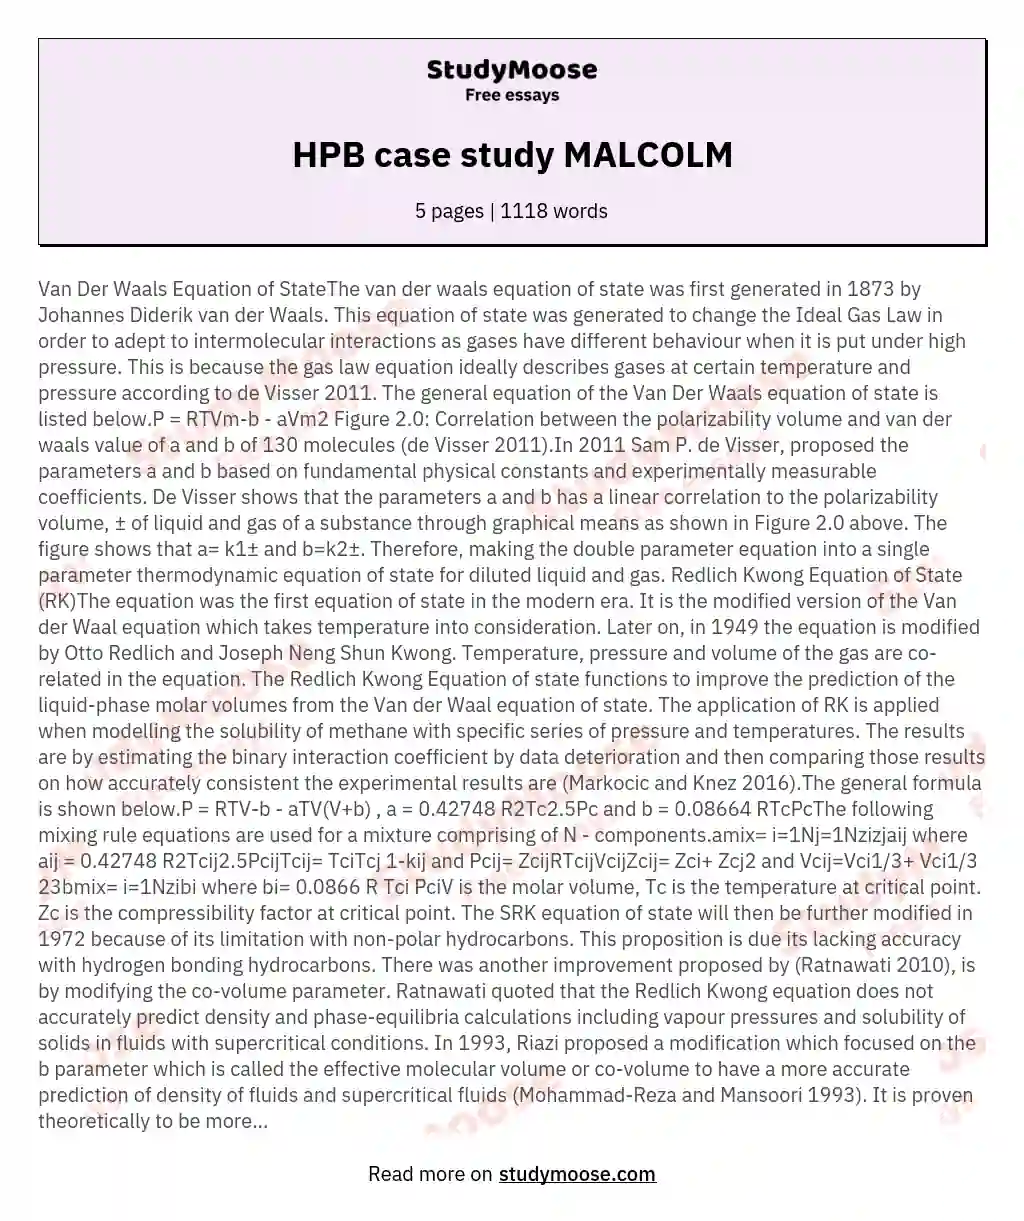 HPB case study MALCOLM essay